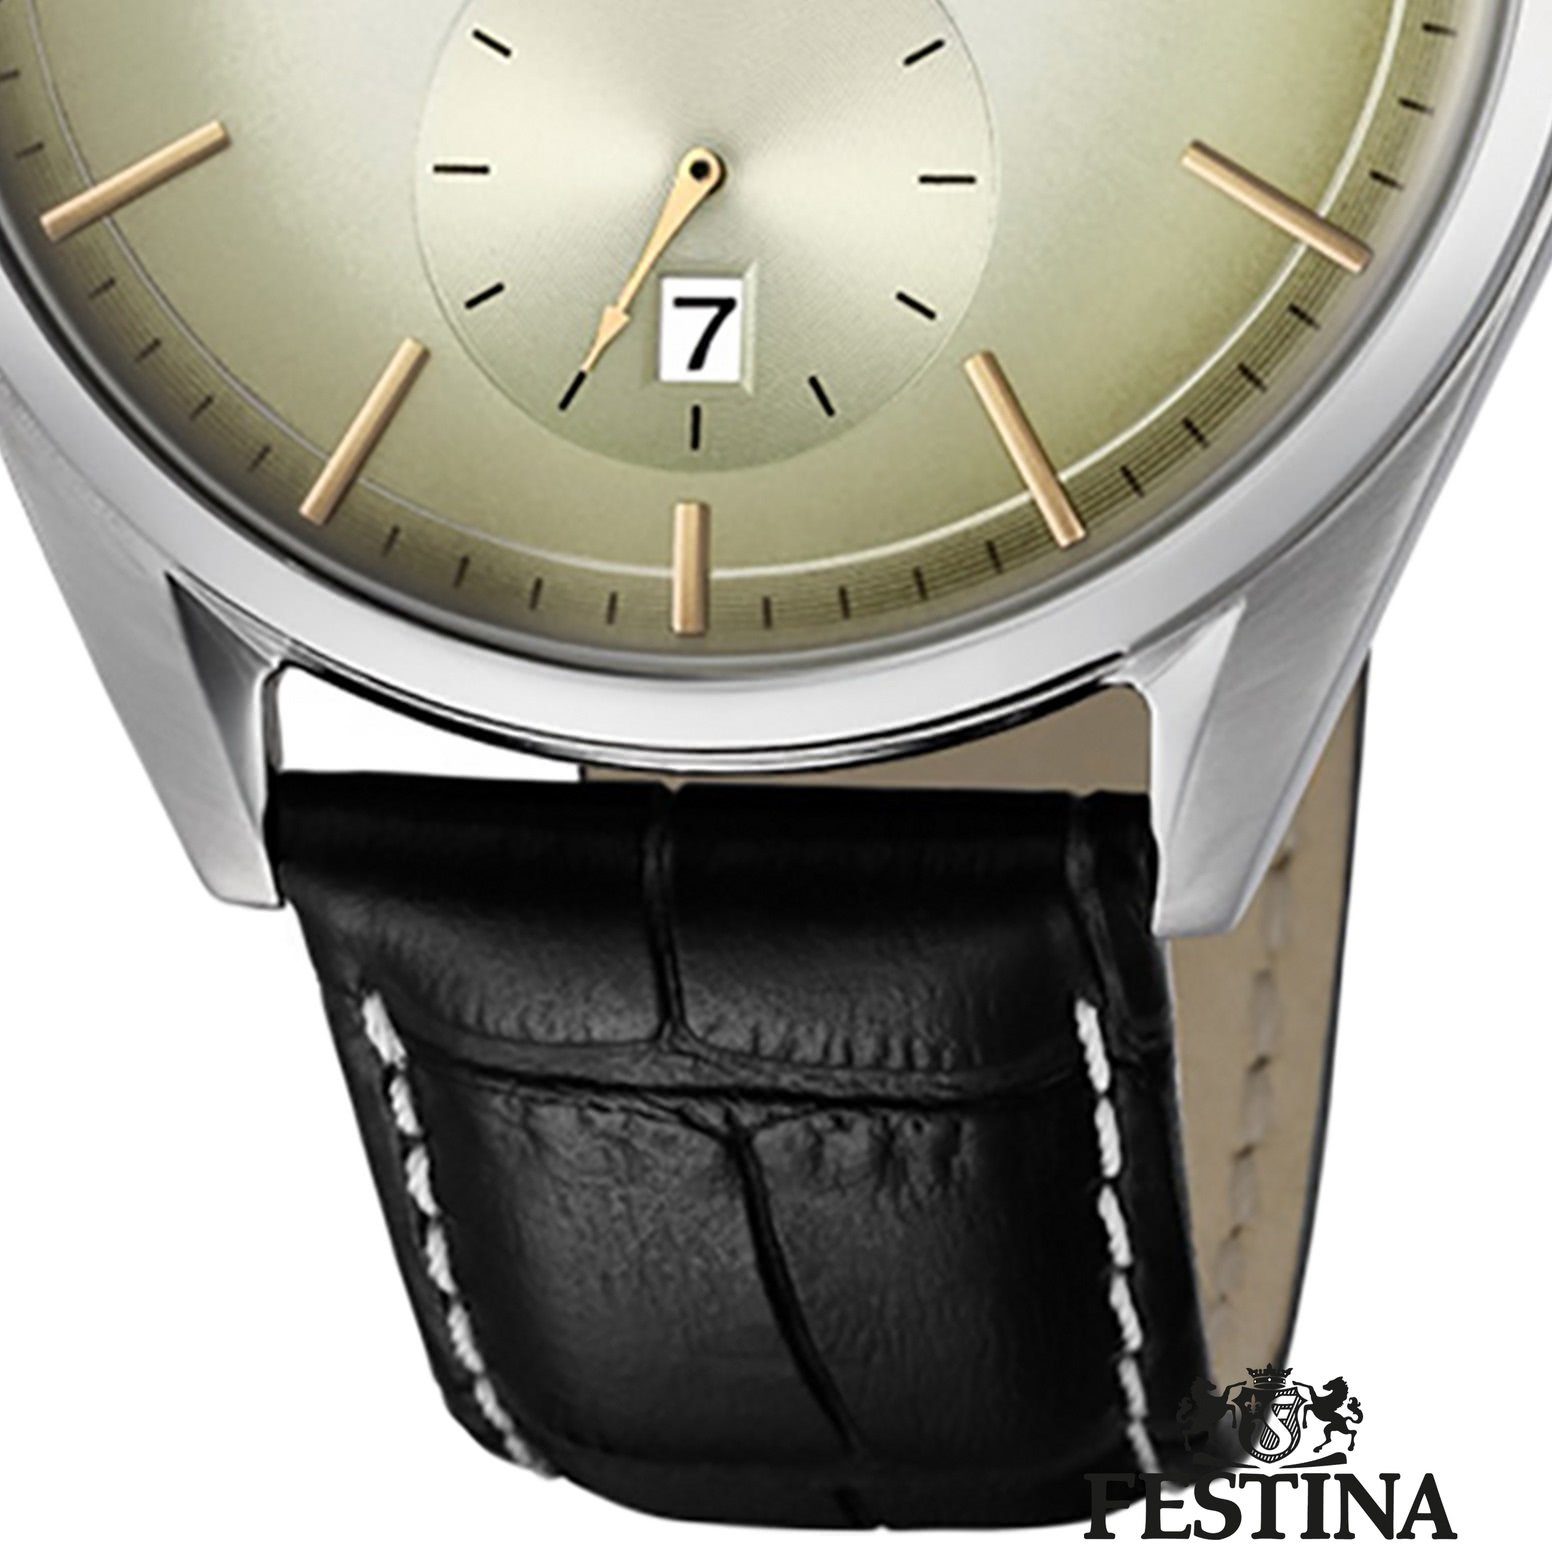 Herren Leder, schwarz Herren Festina Lederarmband Uhr Armbanduhr Analog F6857/1 Festina Quarzuhr rund,